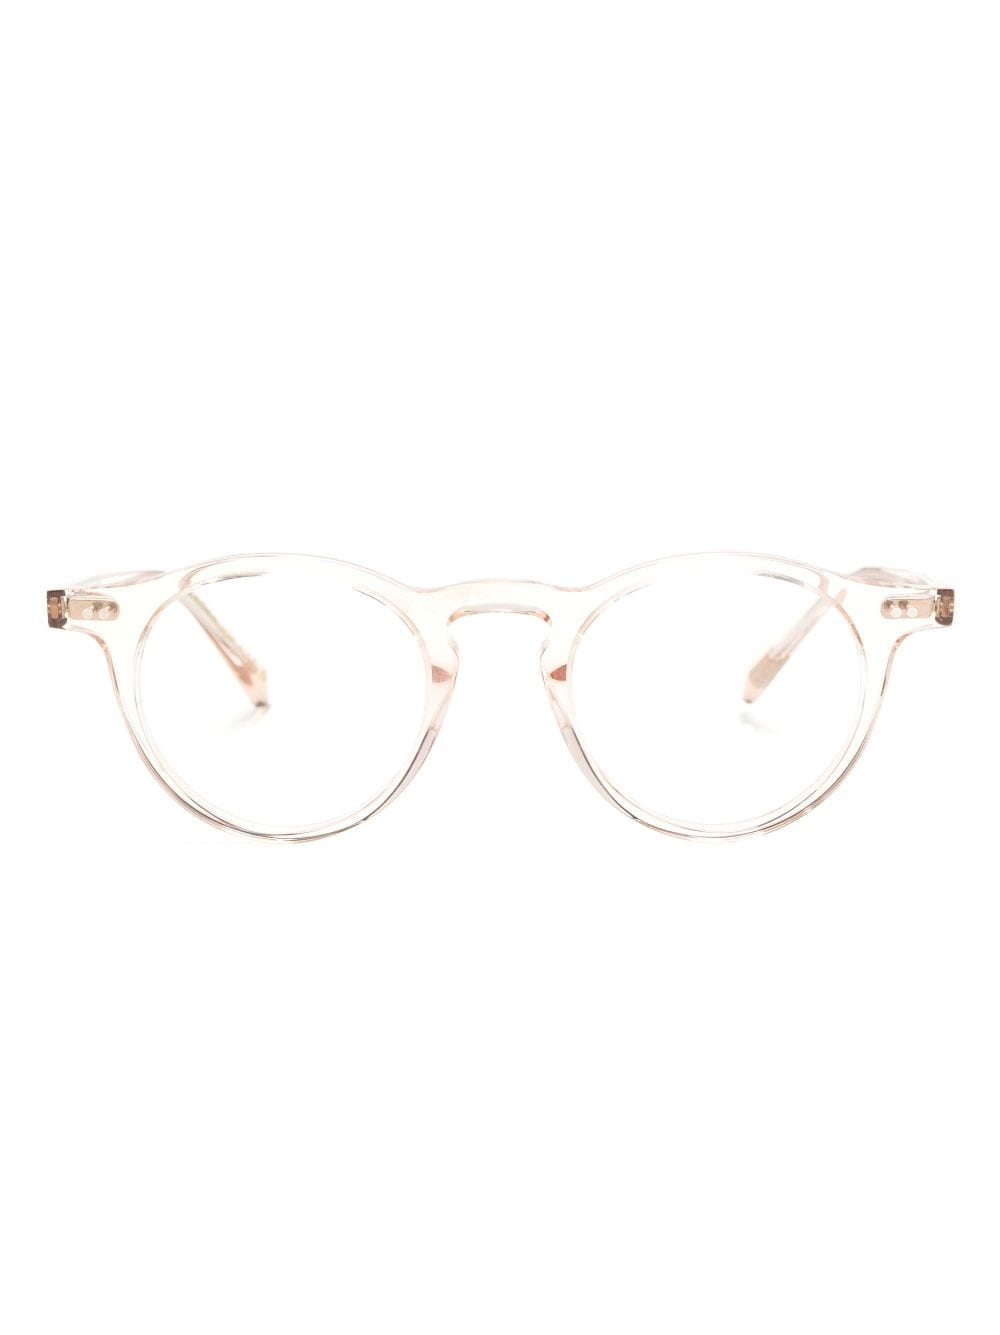 Oliver Peoples Op-13 Round-frame Glasses In Pink